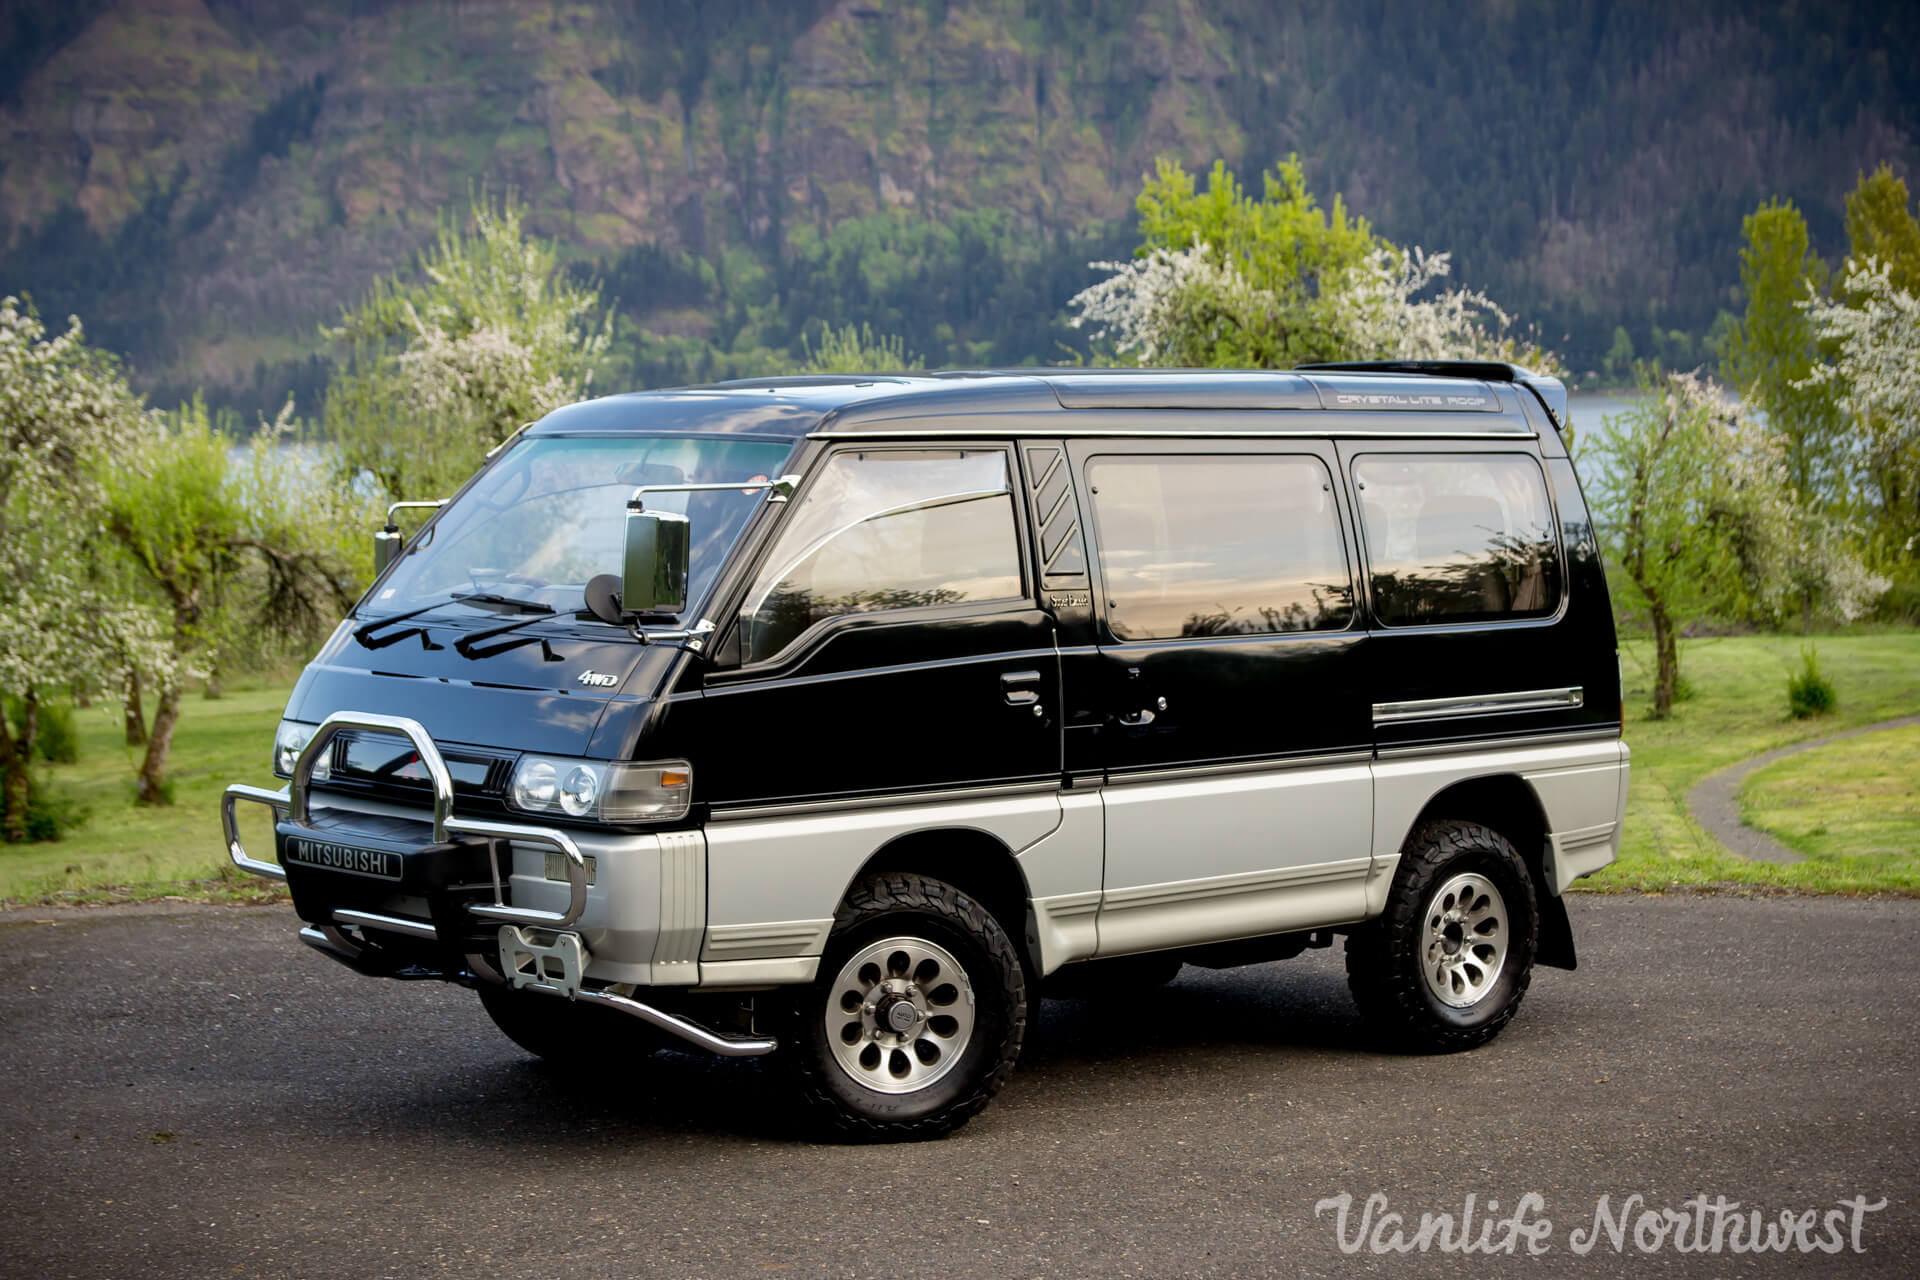 mitsubishi 4x4 van delica for sale